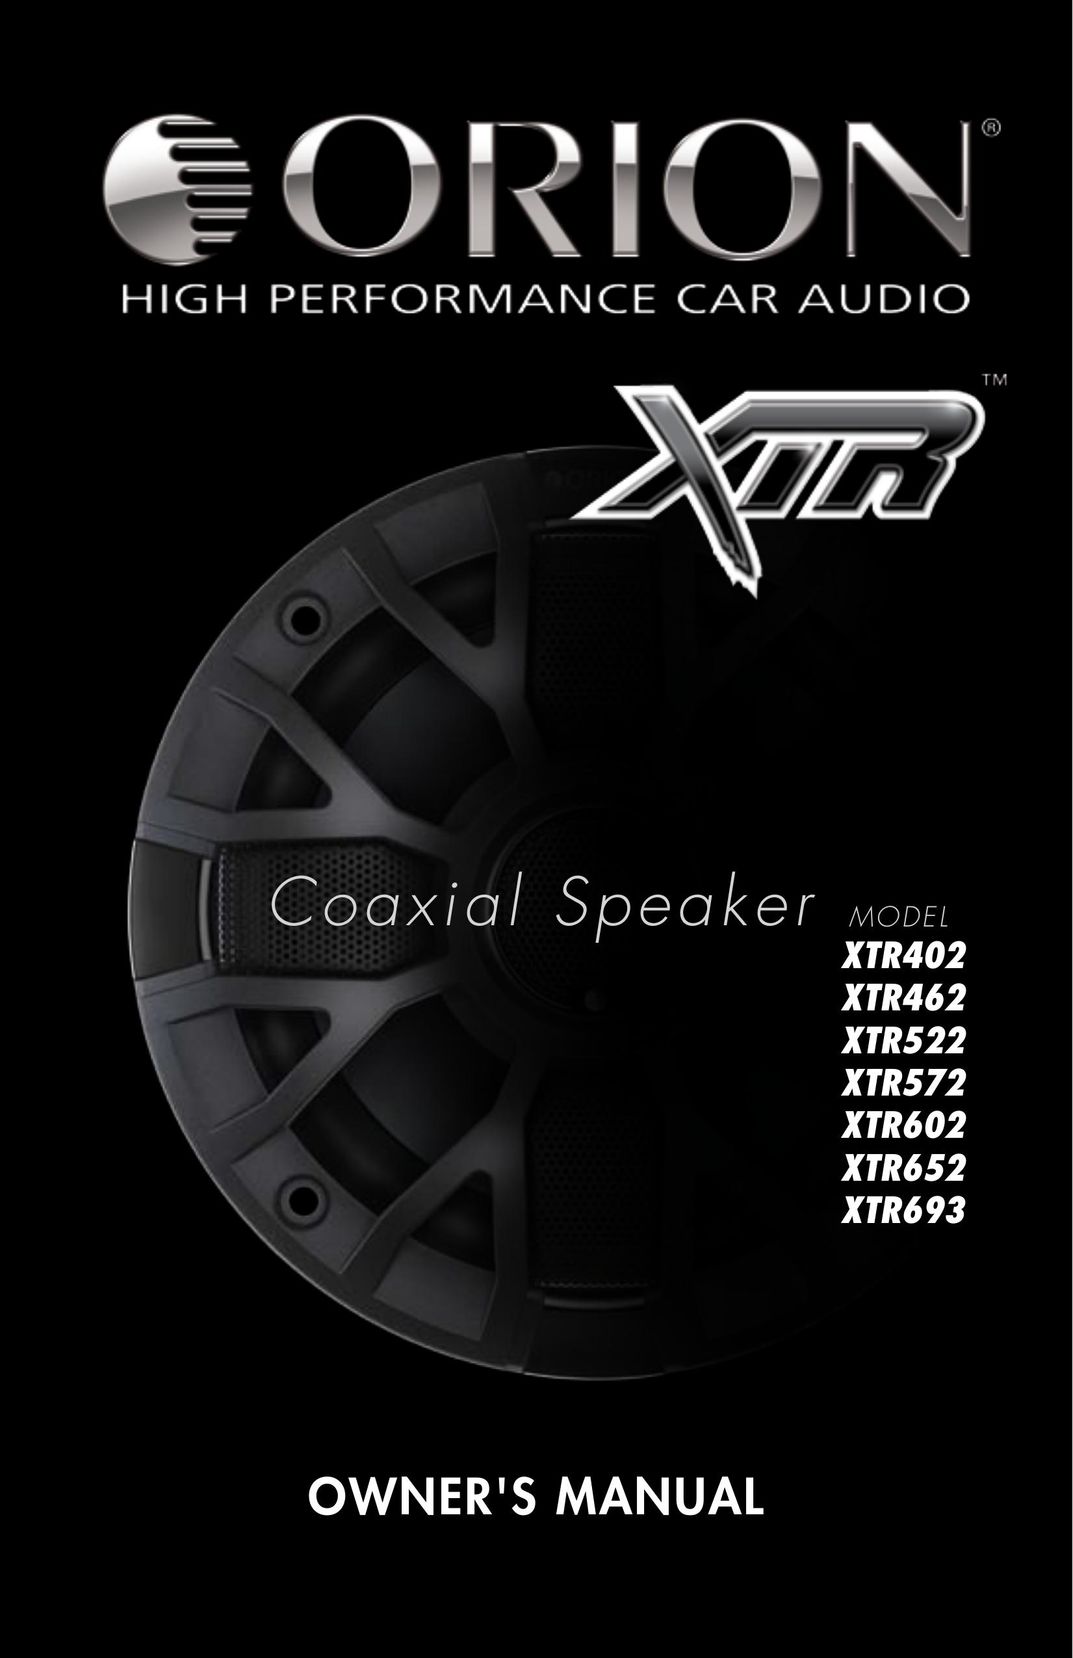 Orion Car Audio XTR693 Car Speaker User Manual